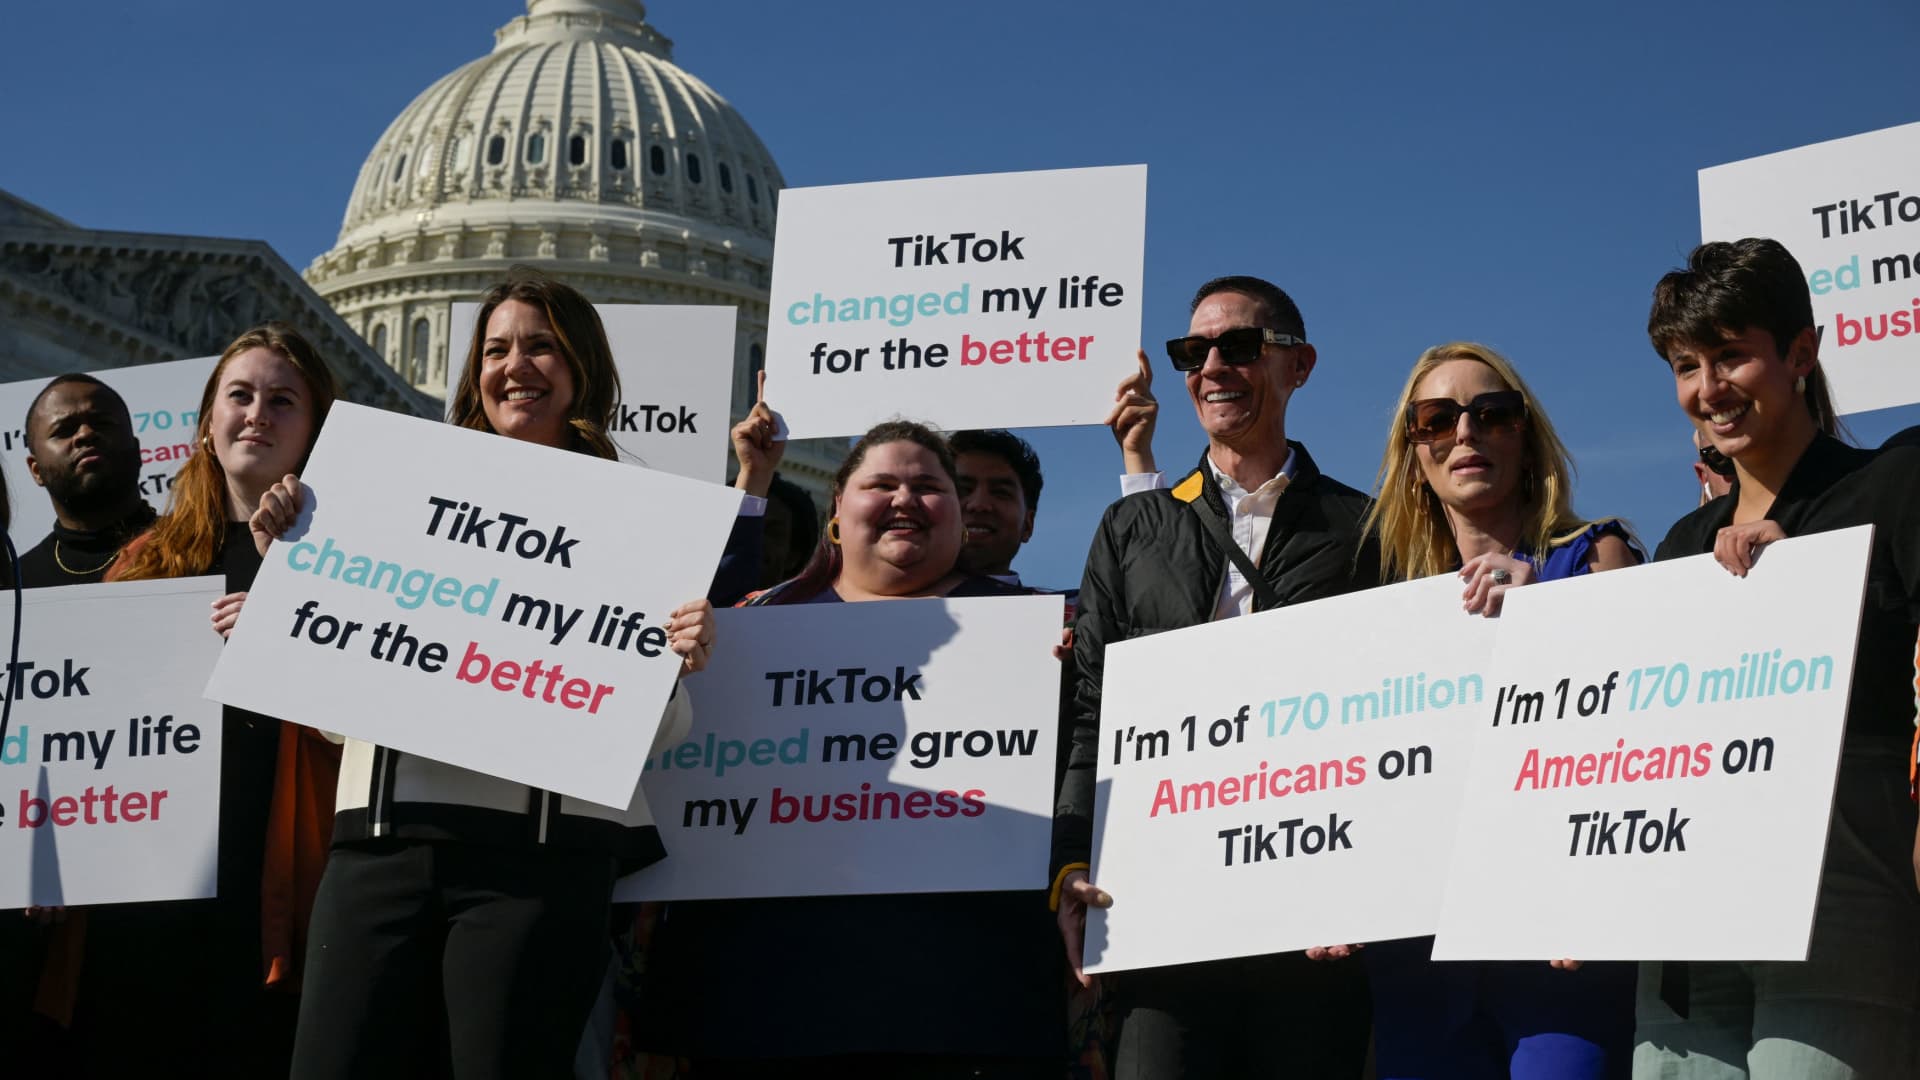 Senate should move swiftly on TikTok bill